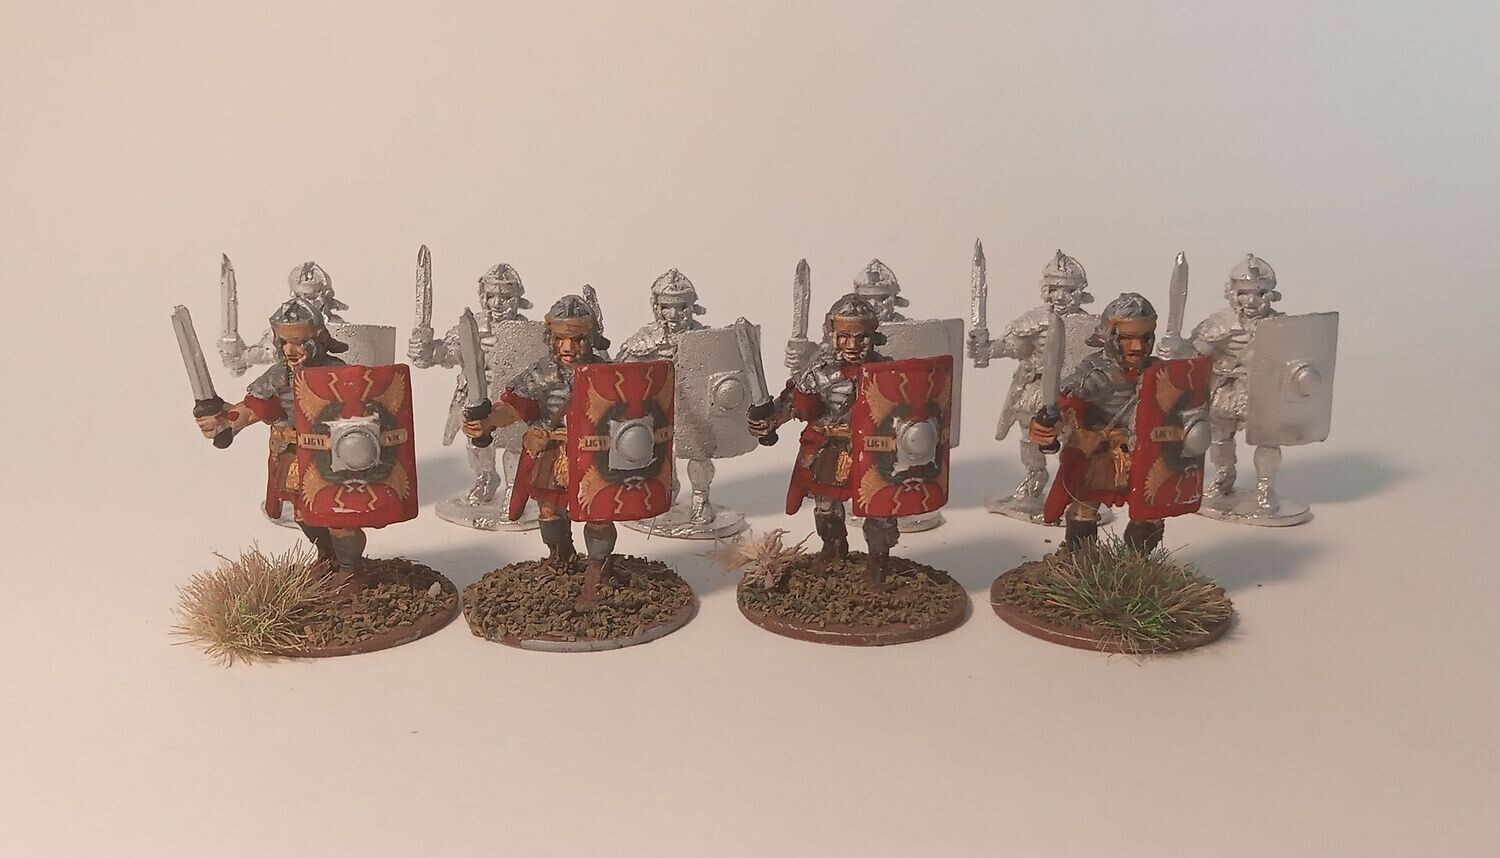 Rom6 Legionaries advancing with upright Gladius